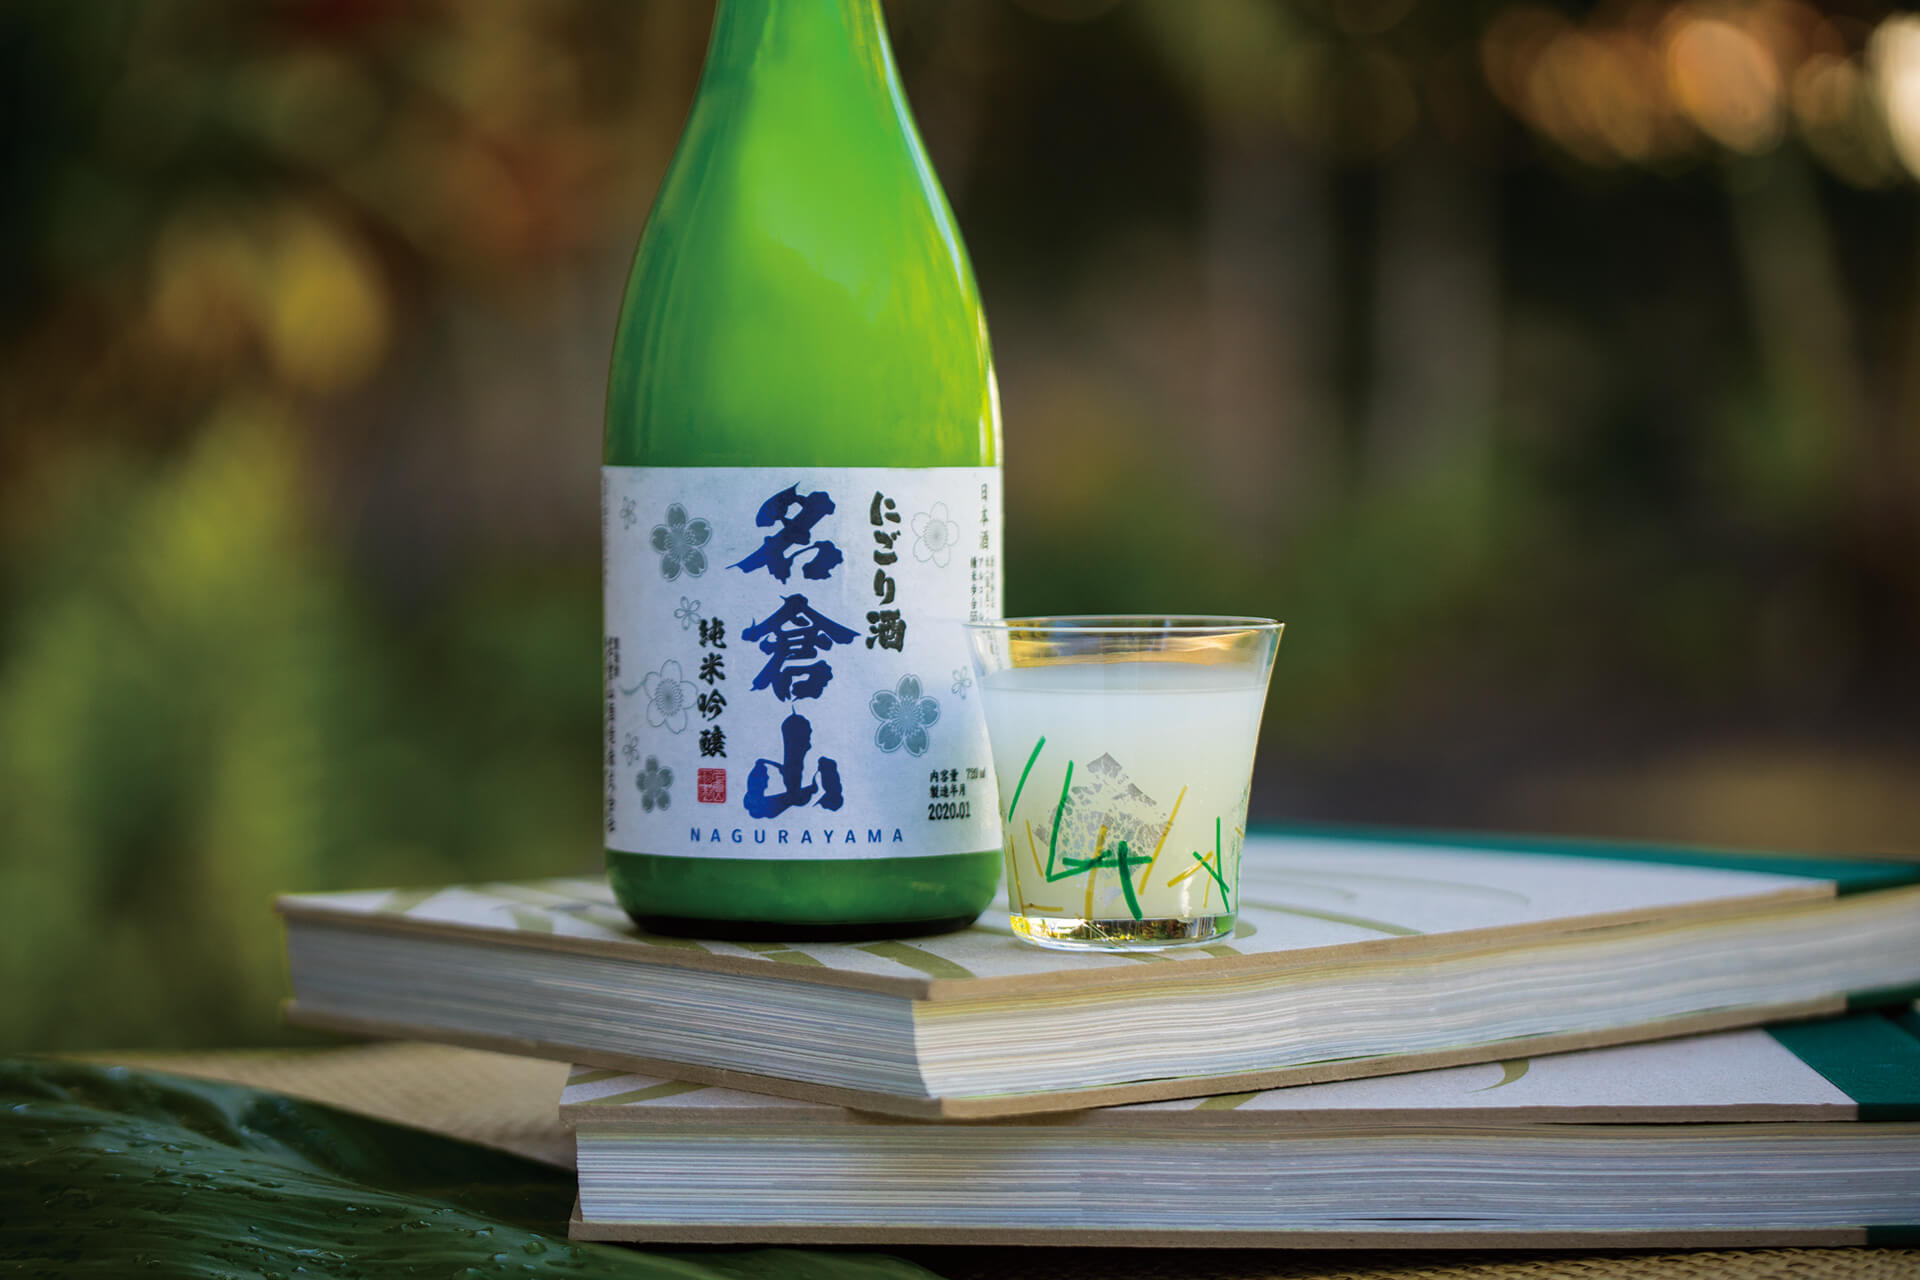 Nagurayama “Nigori Ginjo” bottle